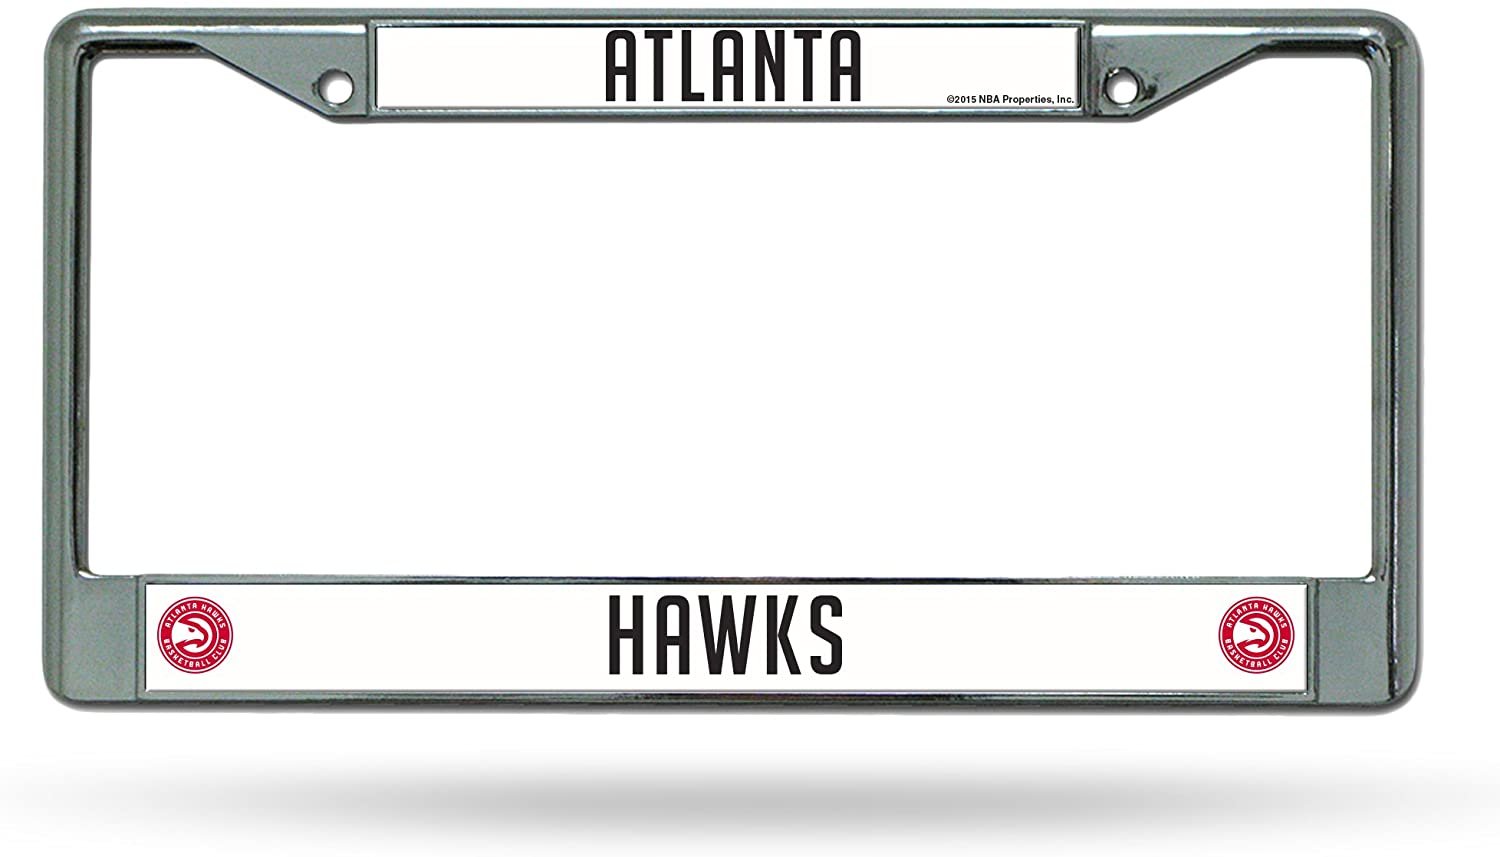 Atlanta Hawks Premium Metal License Plate Frame Chrome Tag Cover, 12x6 Inch